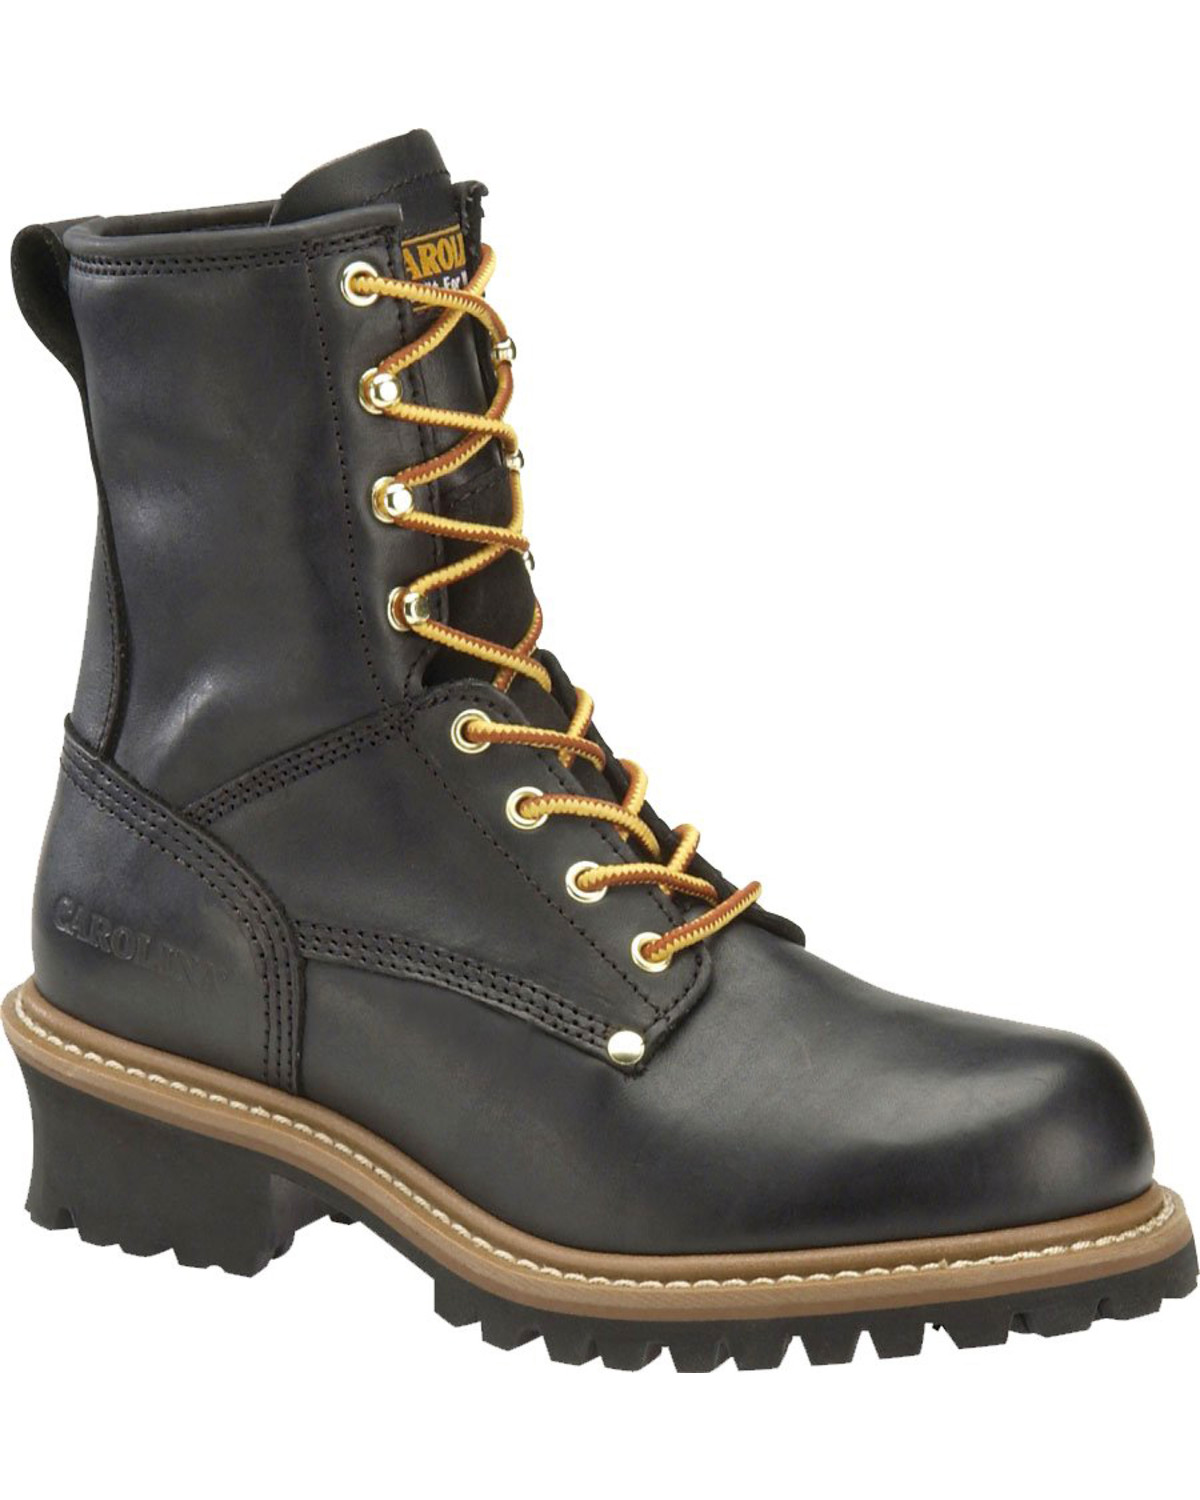 Carolina Men's 8" Logger Boots - Steel Toe